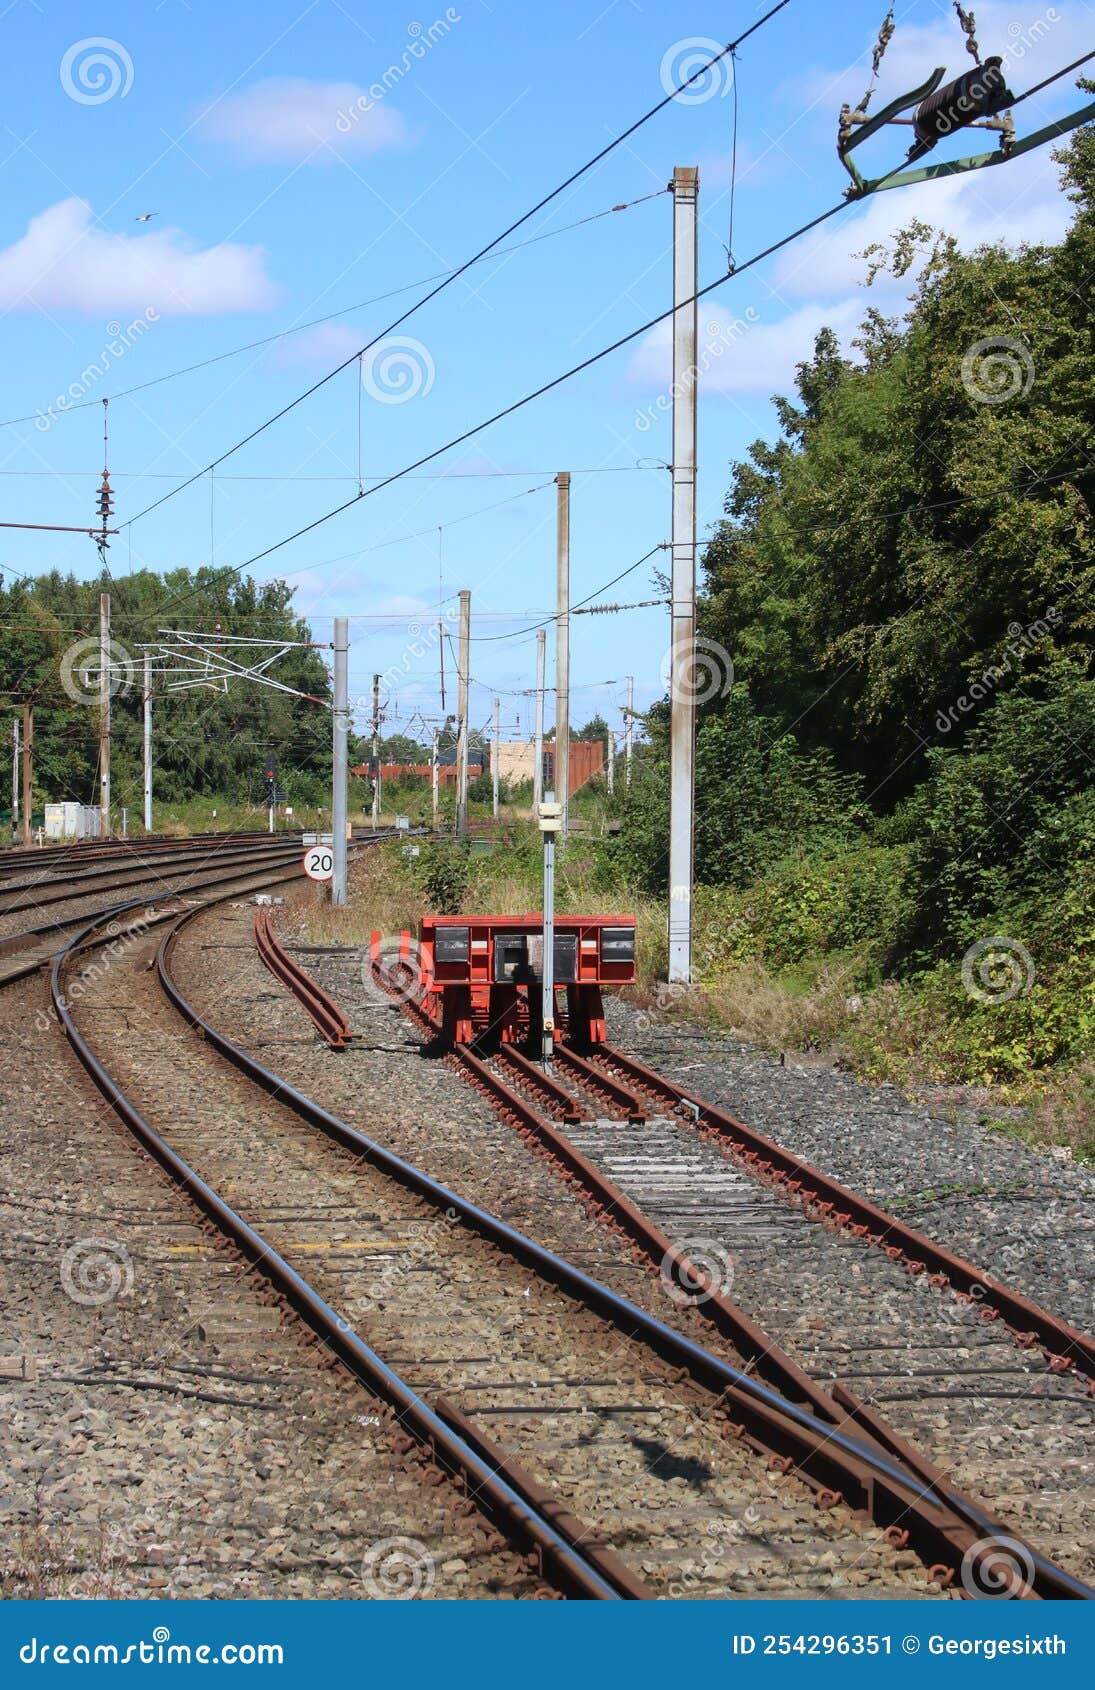 railway track, overhead wires, junction, buffers